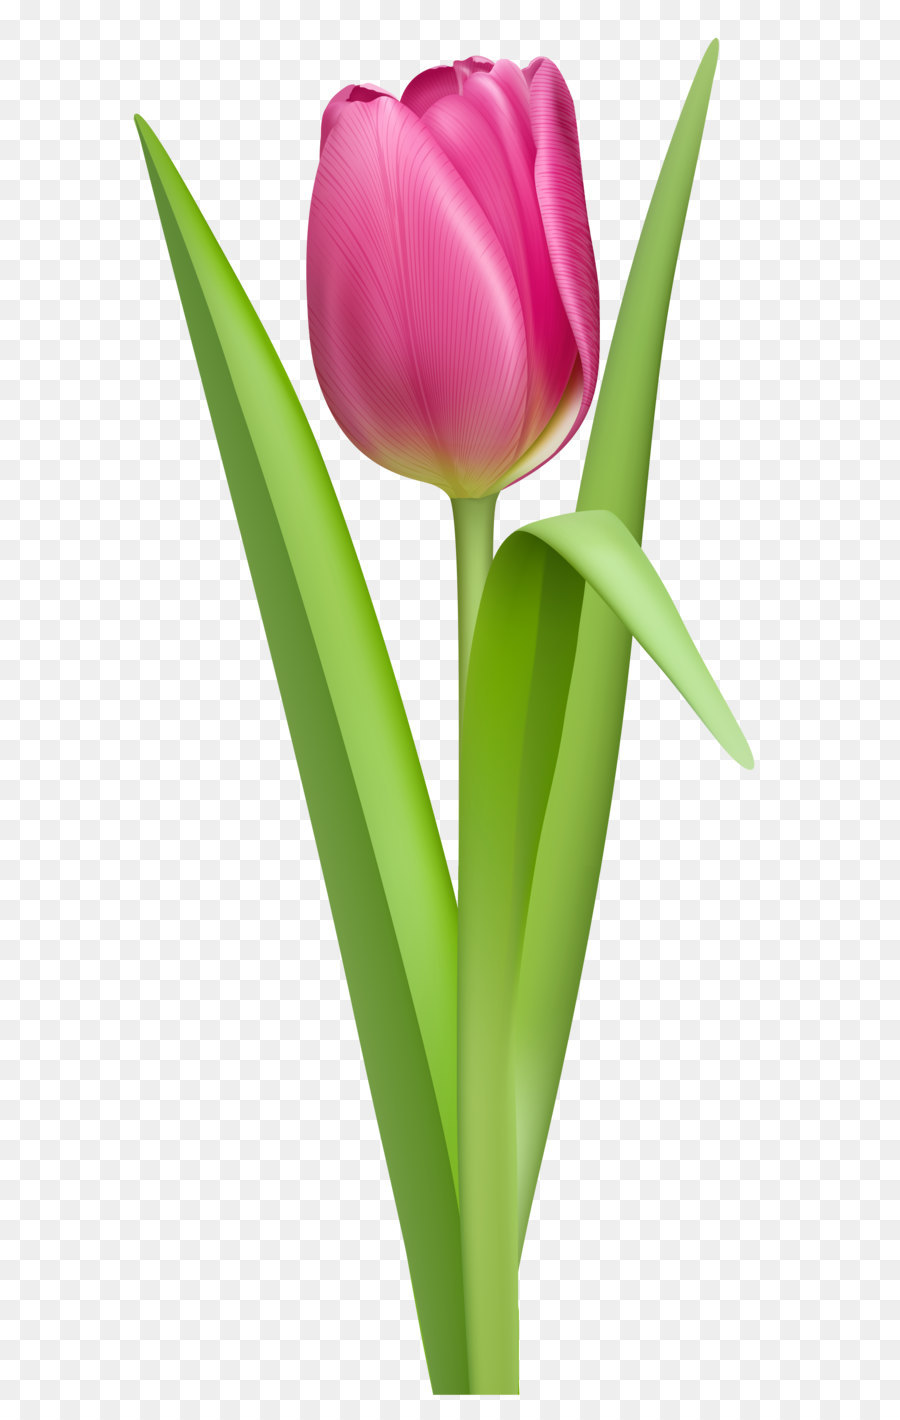 Tulip Clip art - Tulip Png Picture png download - 1851*4000 - Free Transparent Tulip png Download.